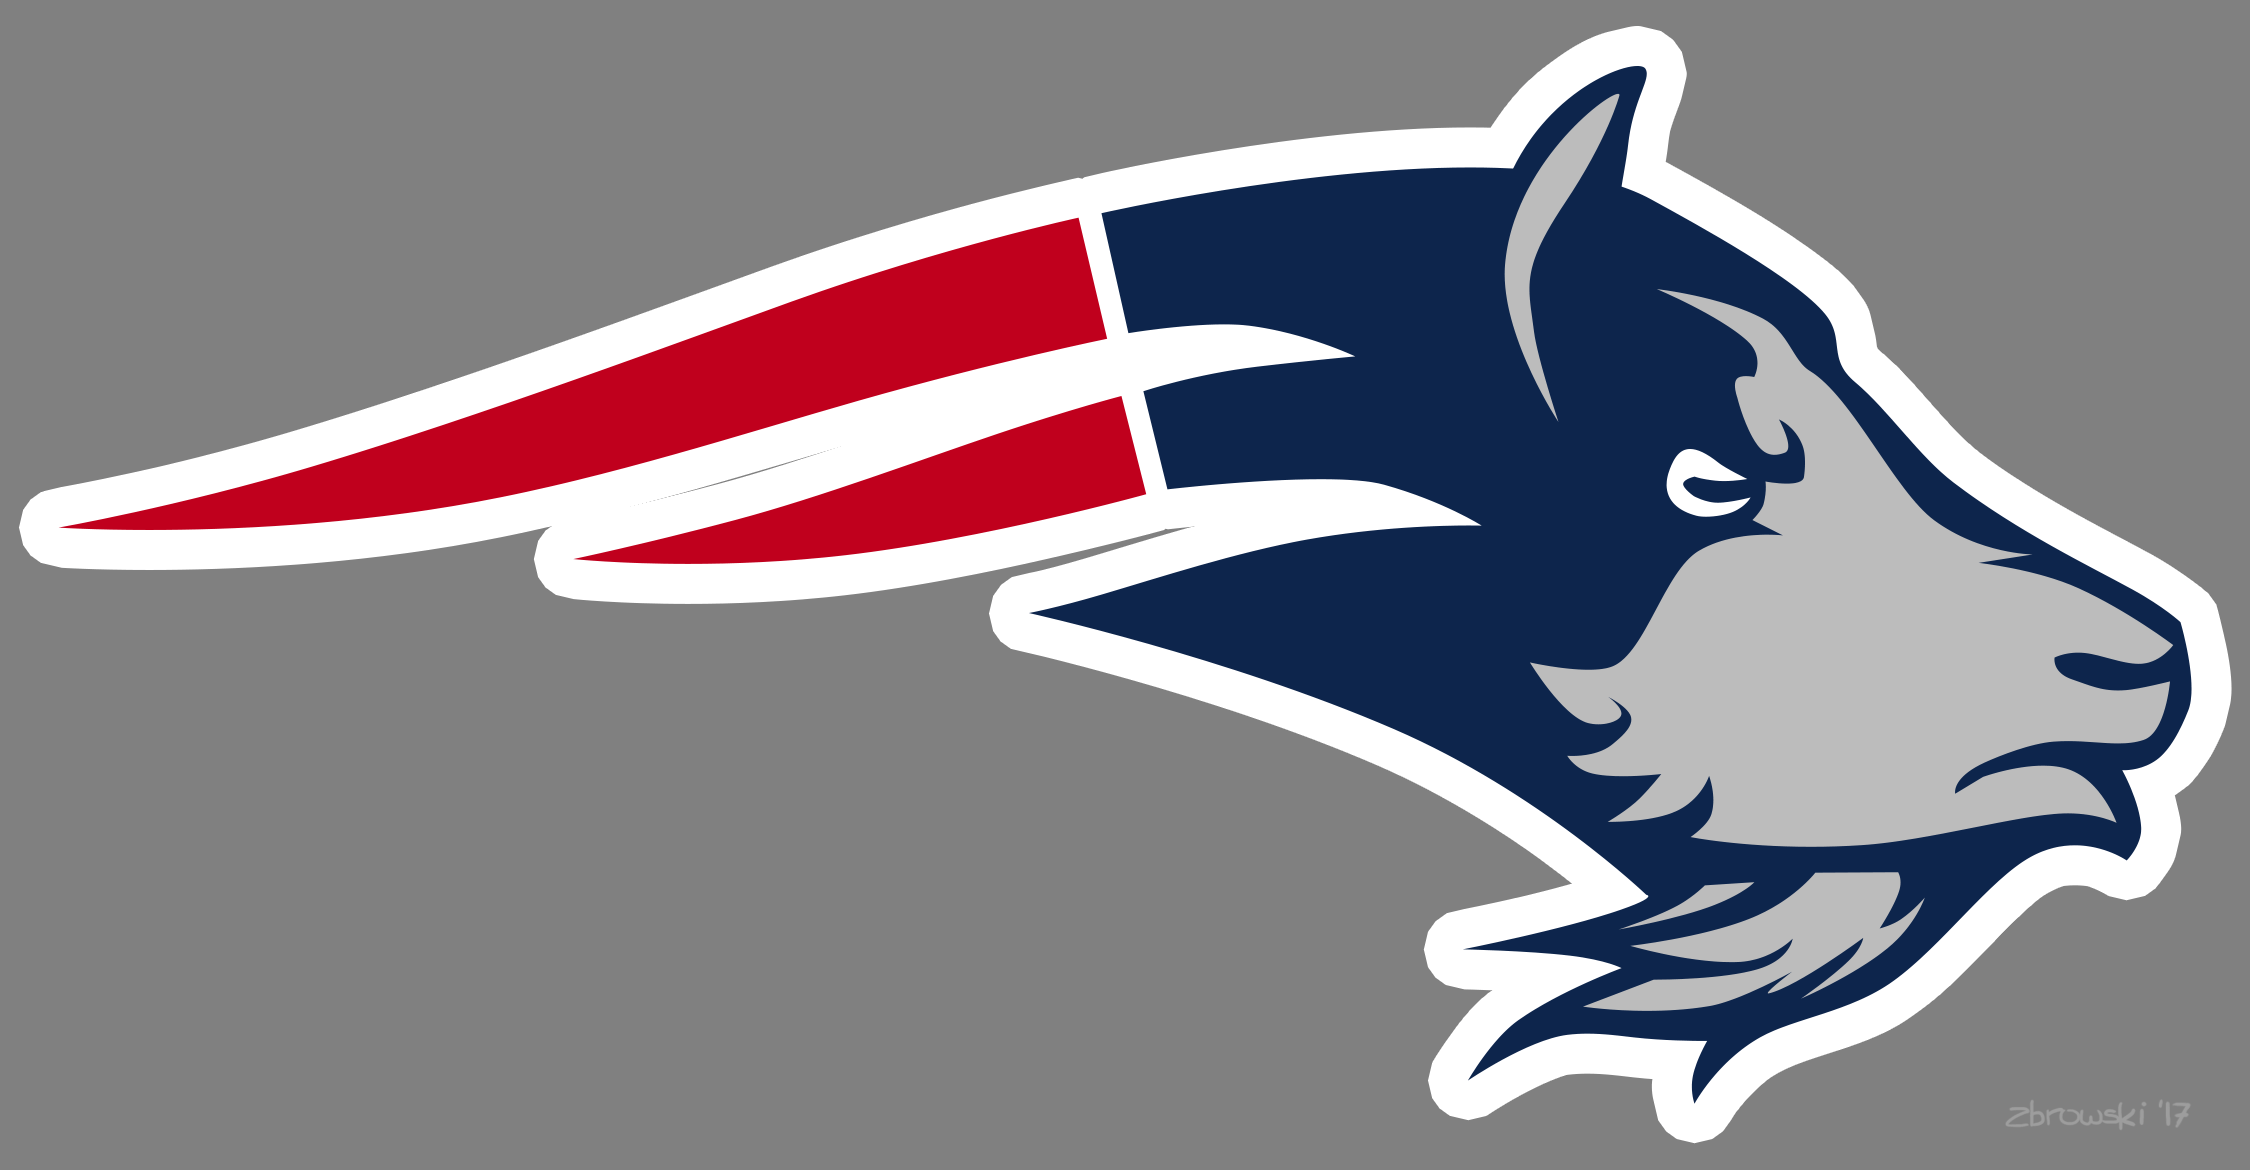 Patriots Logo - Pats unveil new logo for 2017 campaign! : Patriots